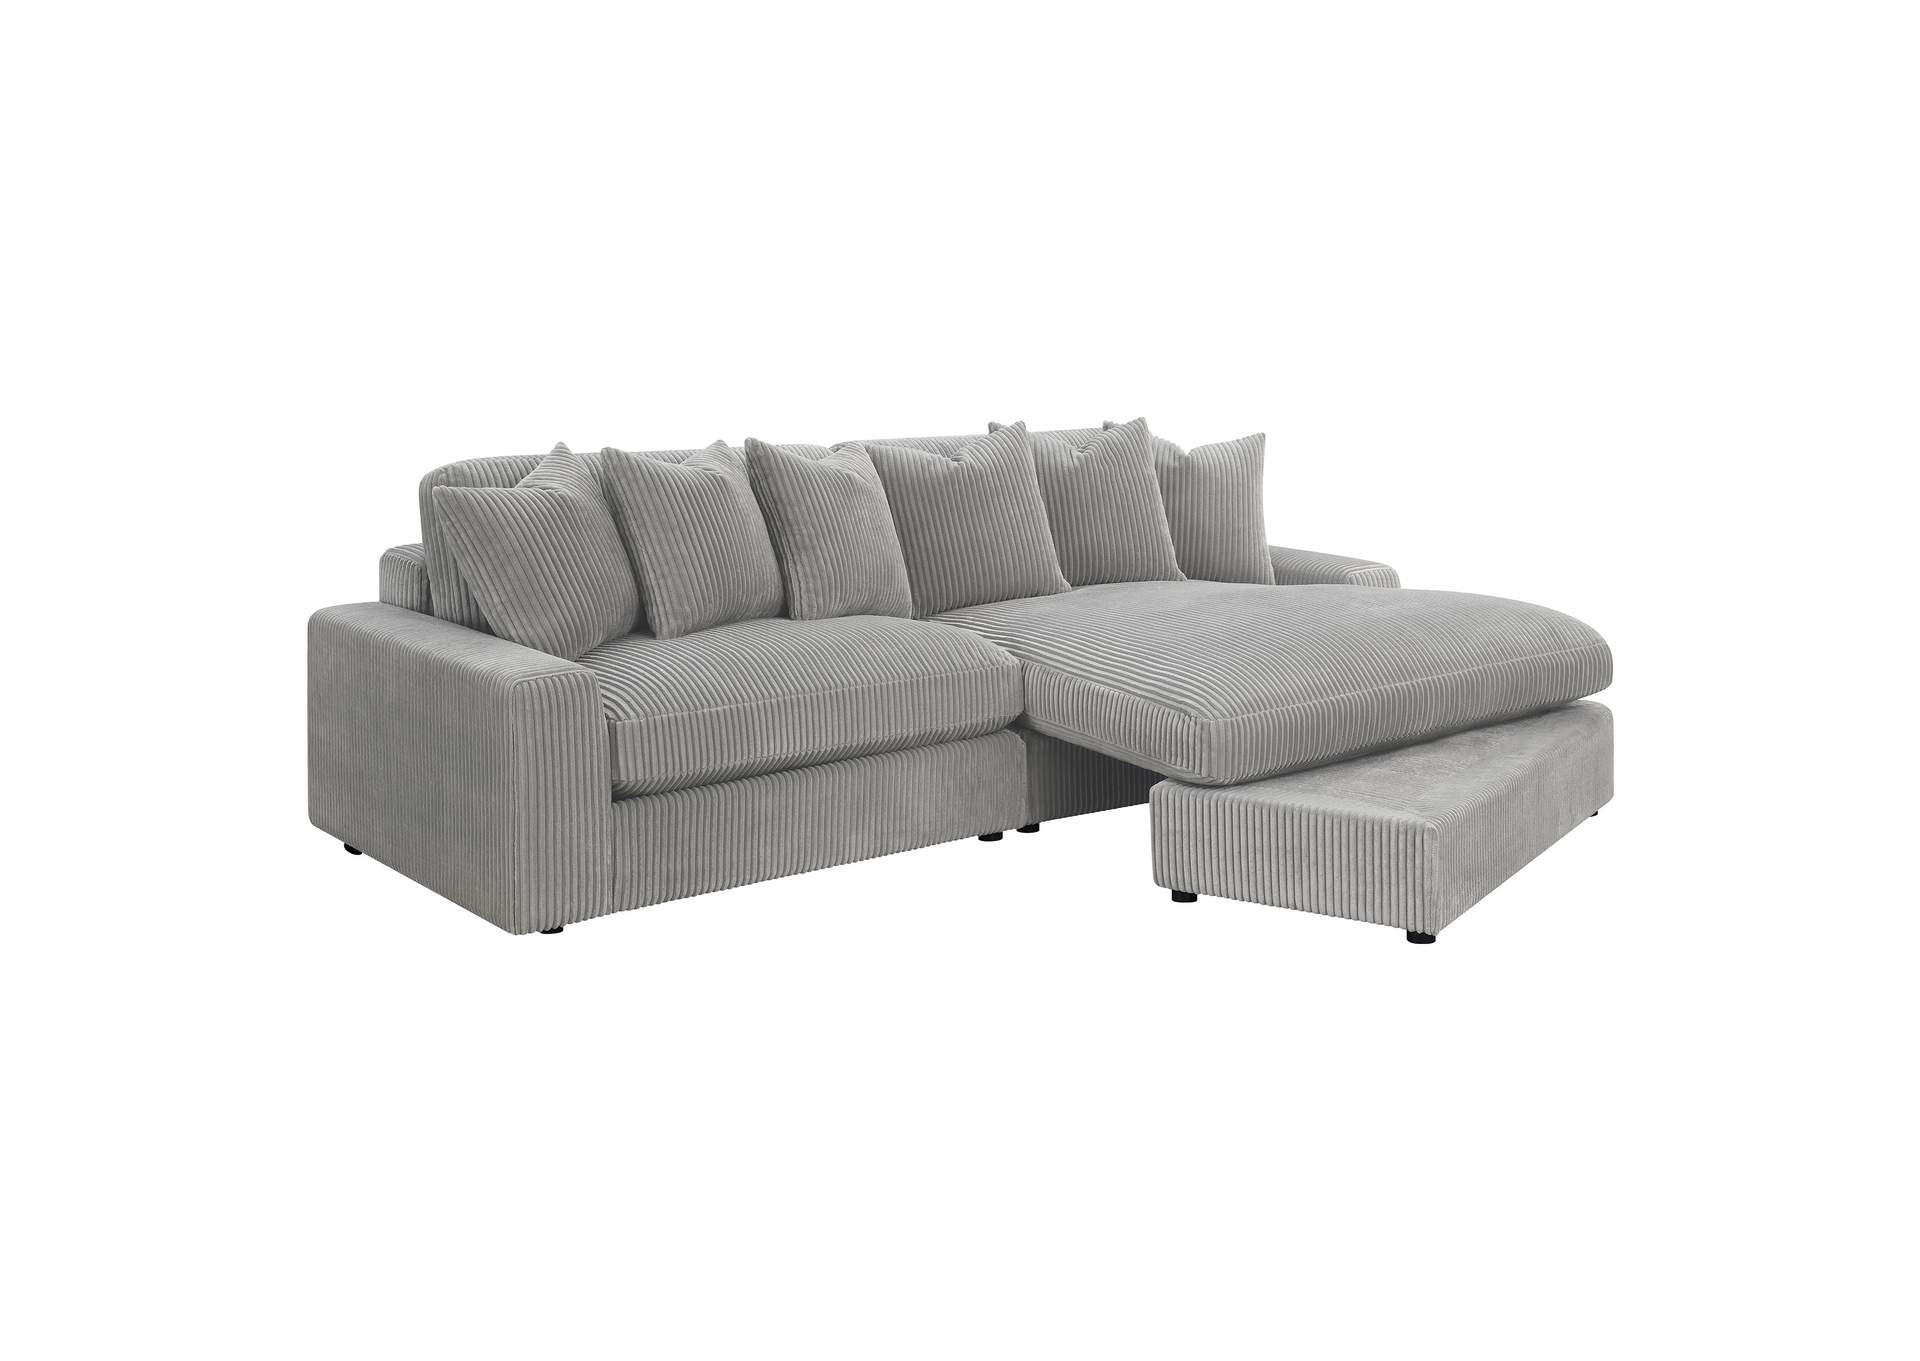 Blaine Upholstered Reversible Sectional Fog,Coaster Furniture